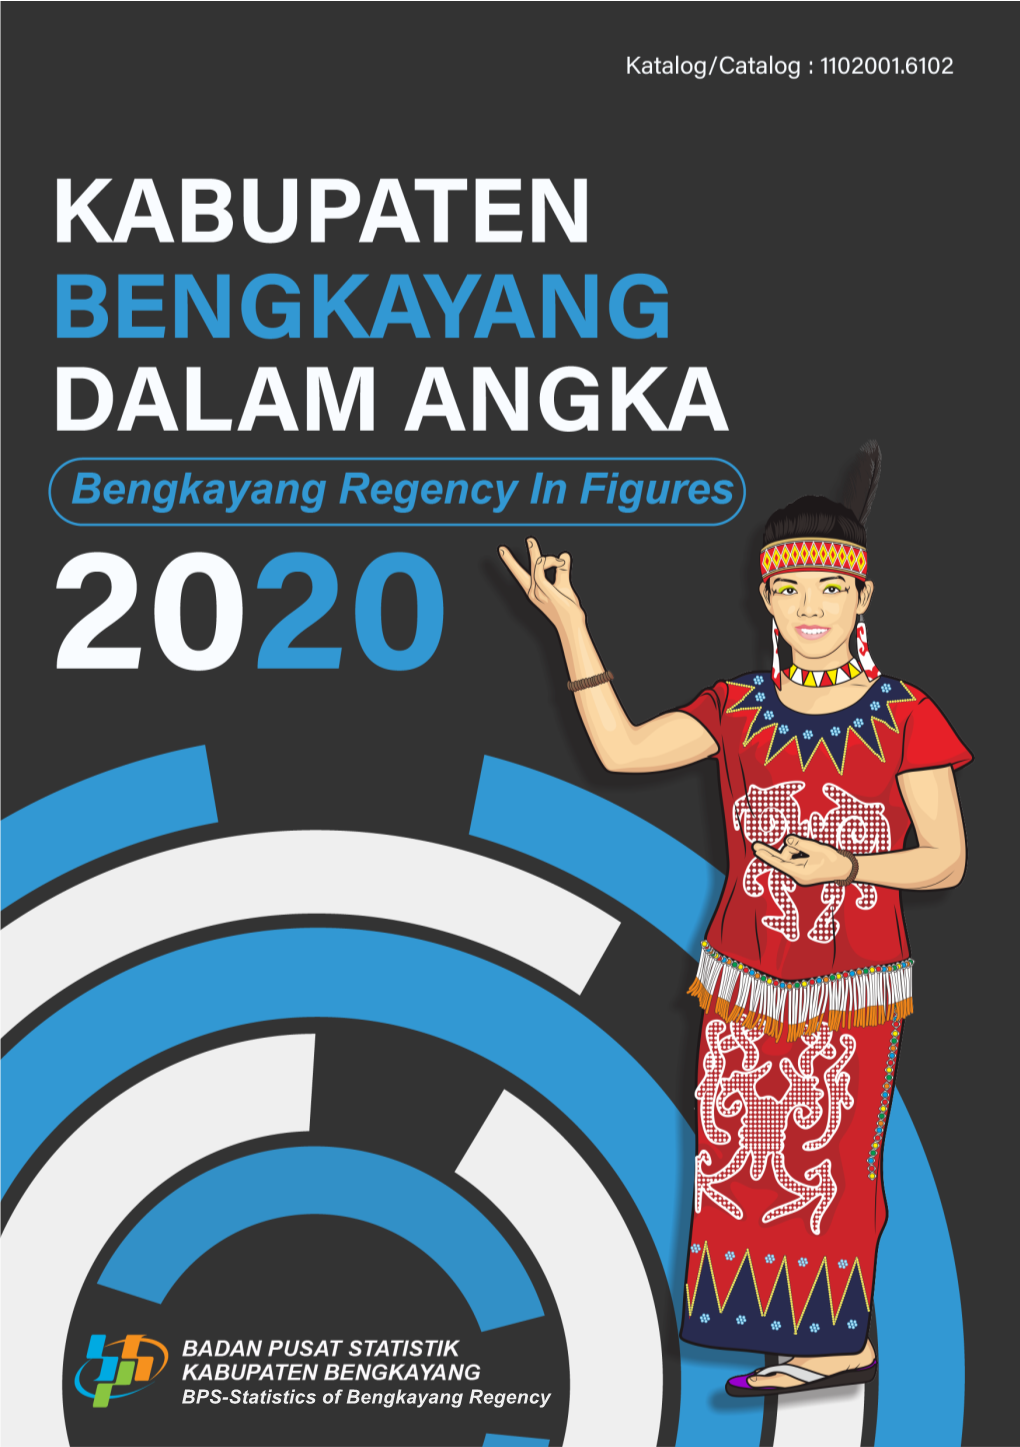 BPS-Statistics of Bengkayang Regency BPS-Statistics of Bengkayang Regency Kabupaten Bengkayang DALAM ANGKA Bengkayang Regency in Figures 2020